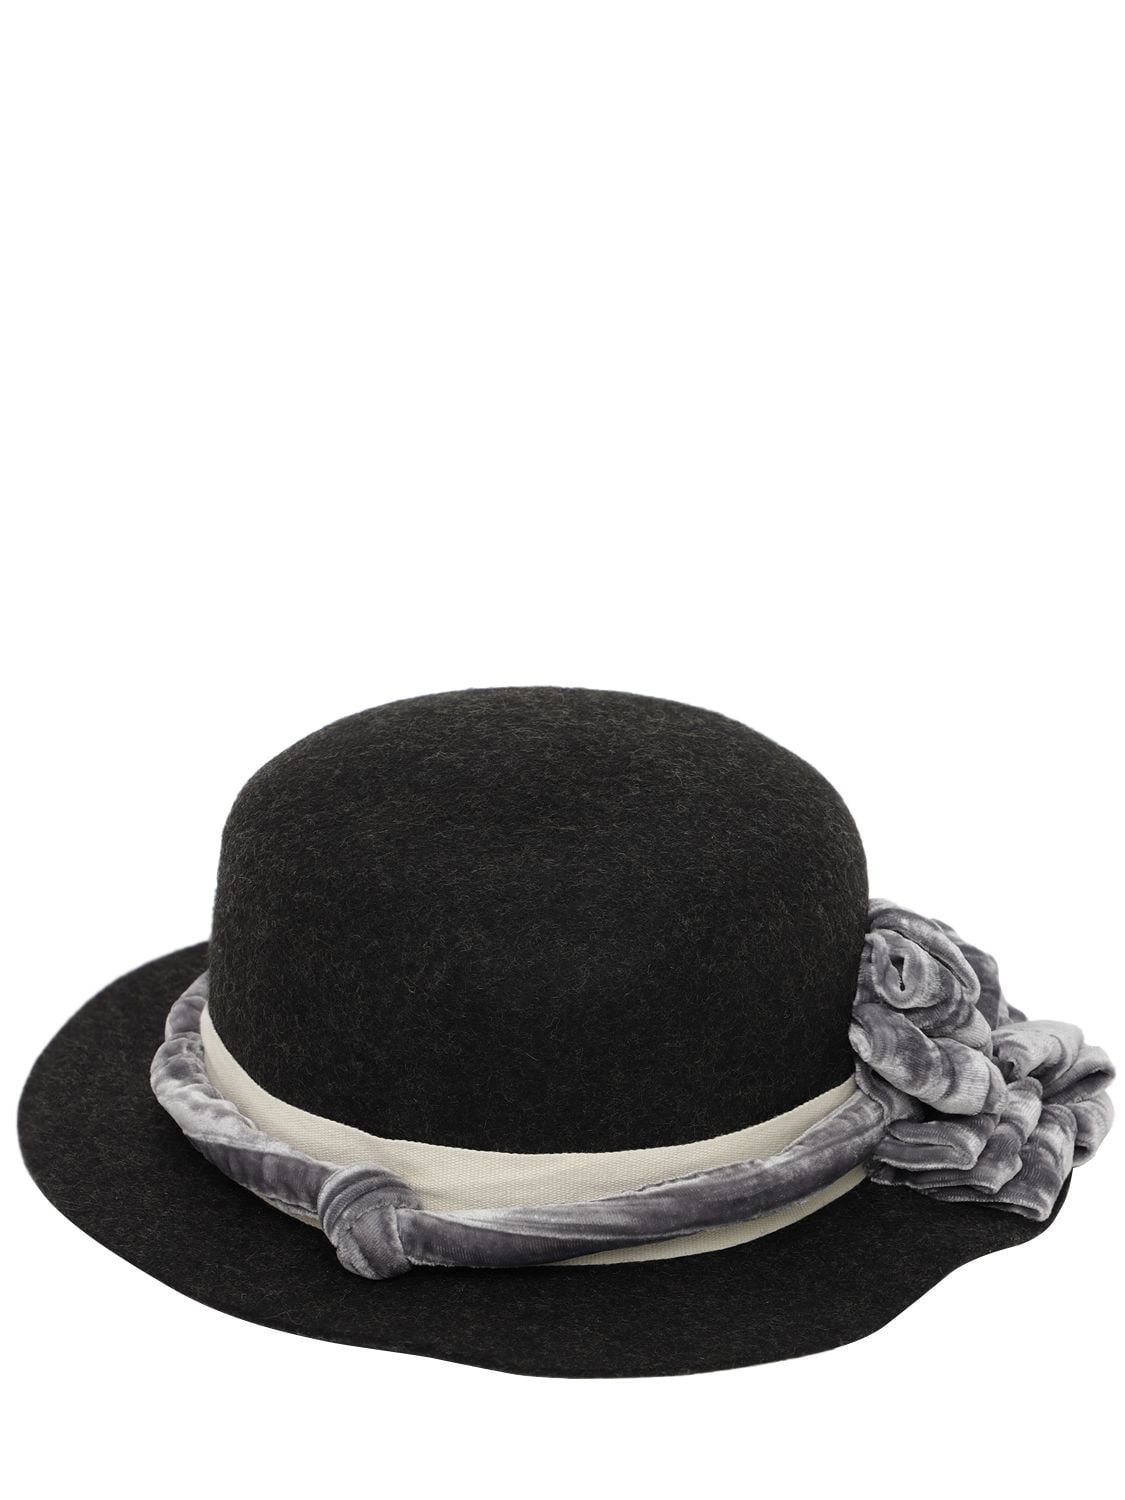 Tia Cibani Babies' Wool Hat W/ Flower Appliqué In Black